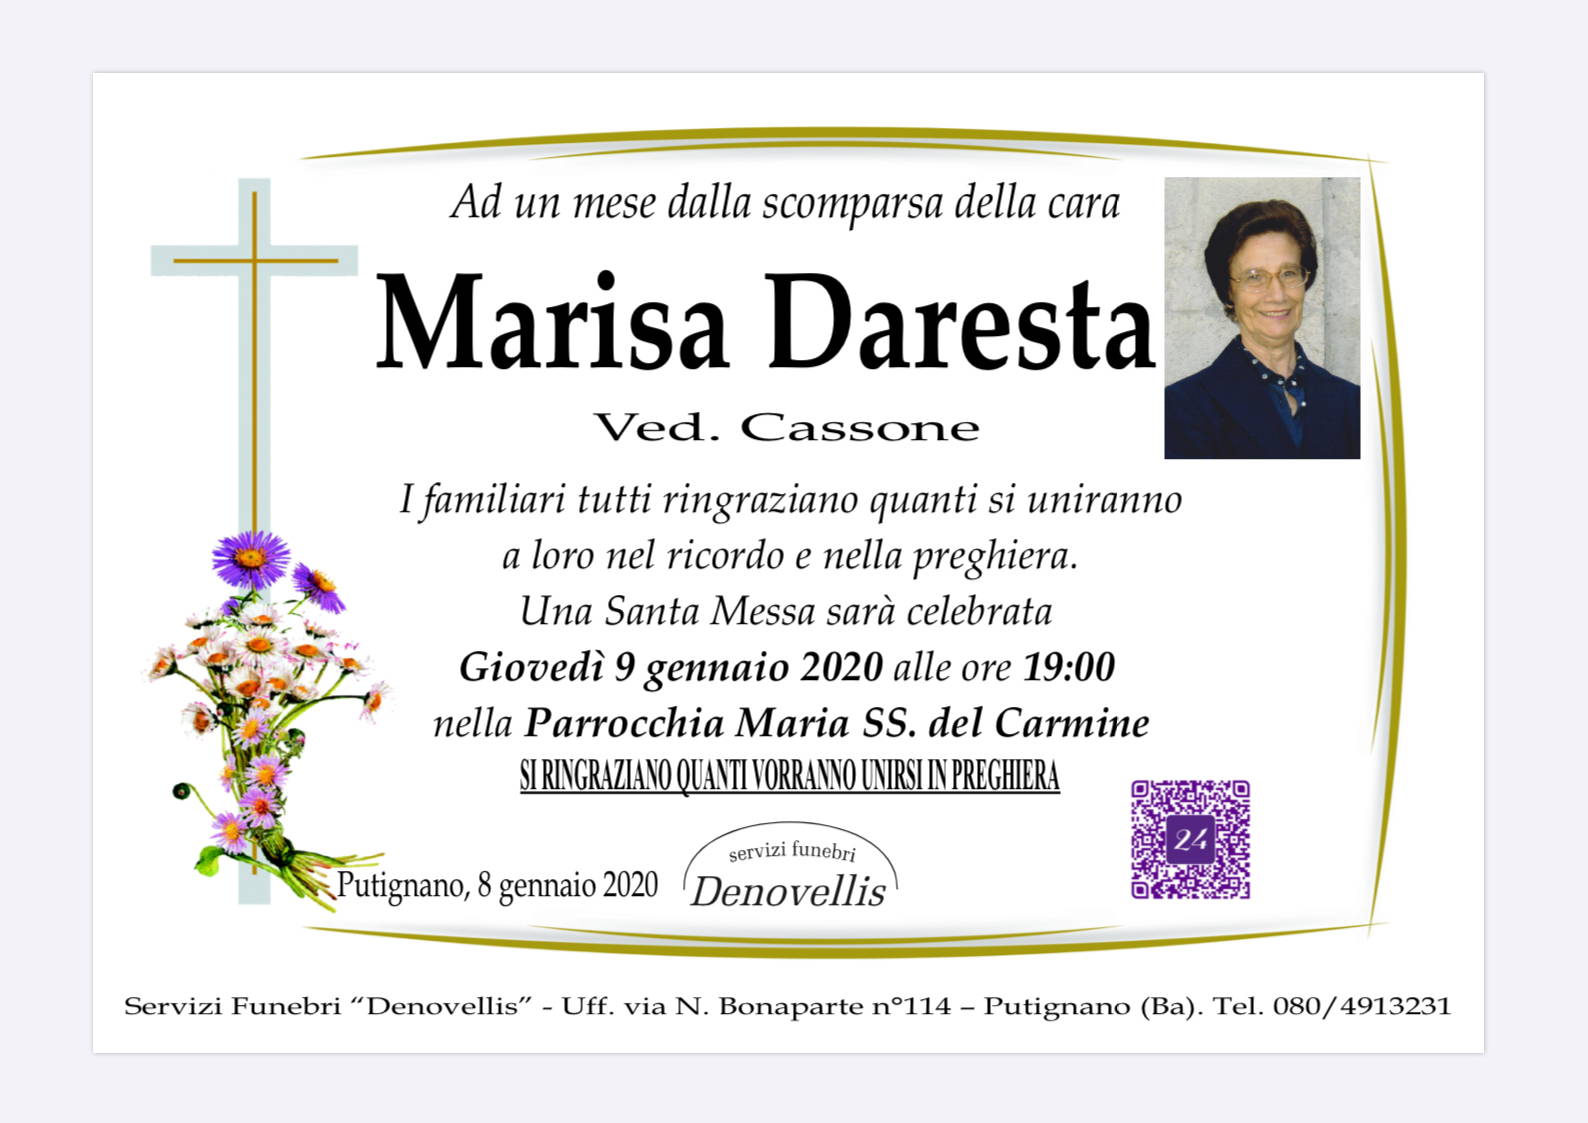 Marisa Daresta